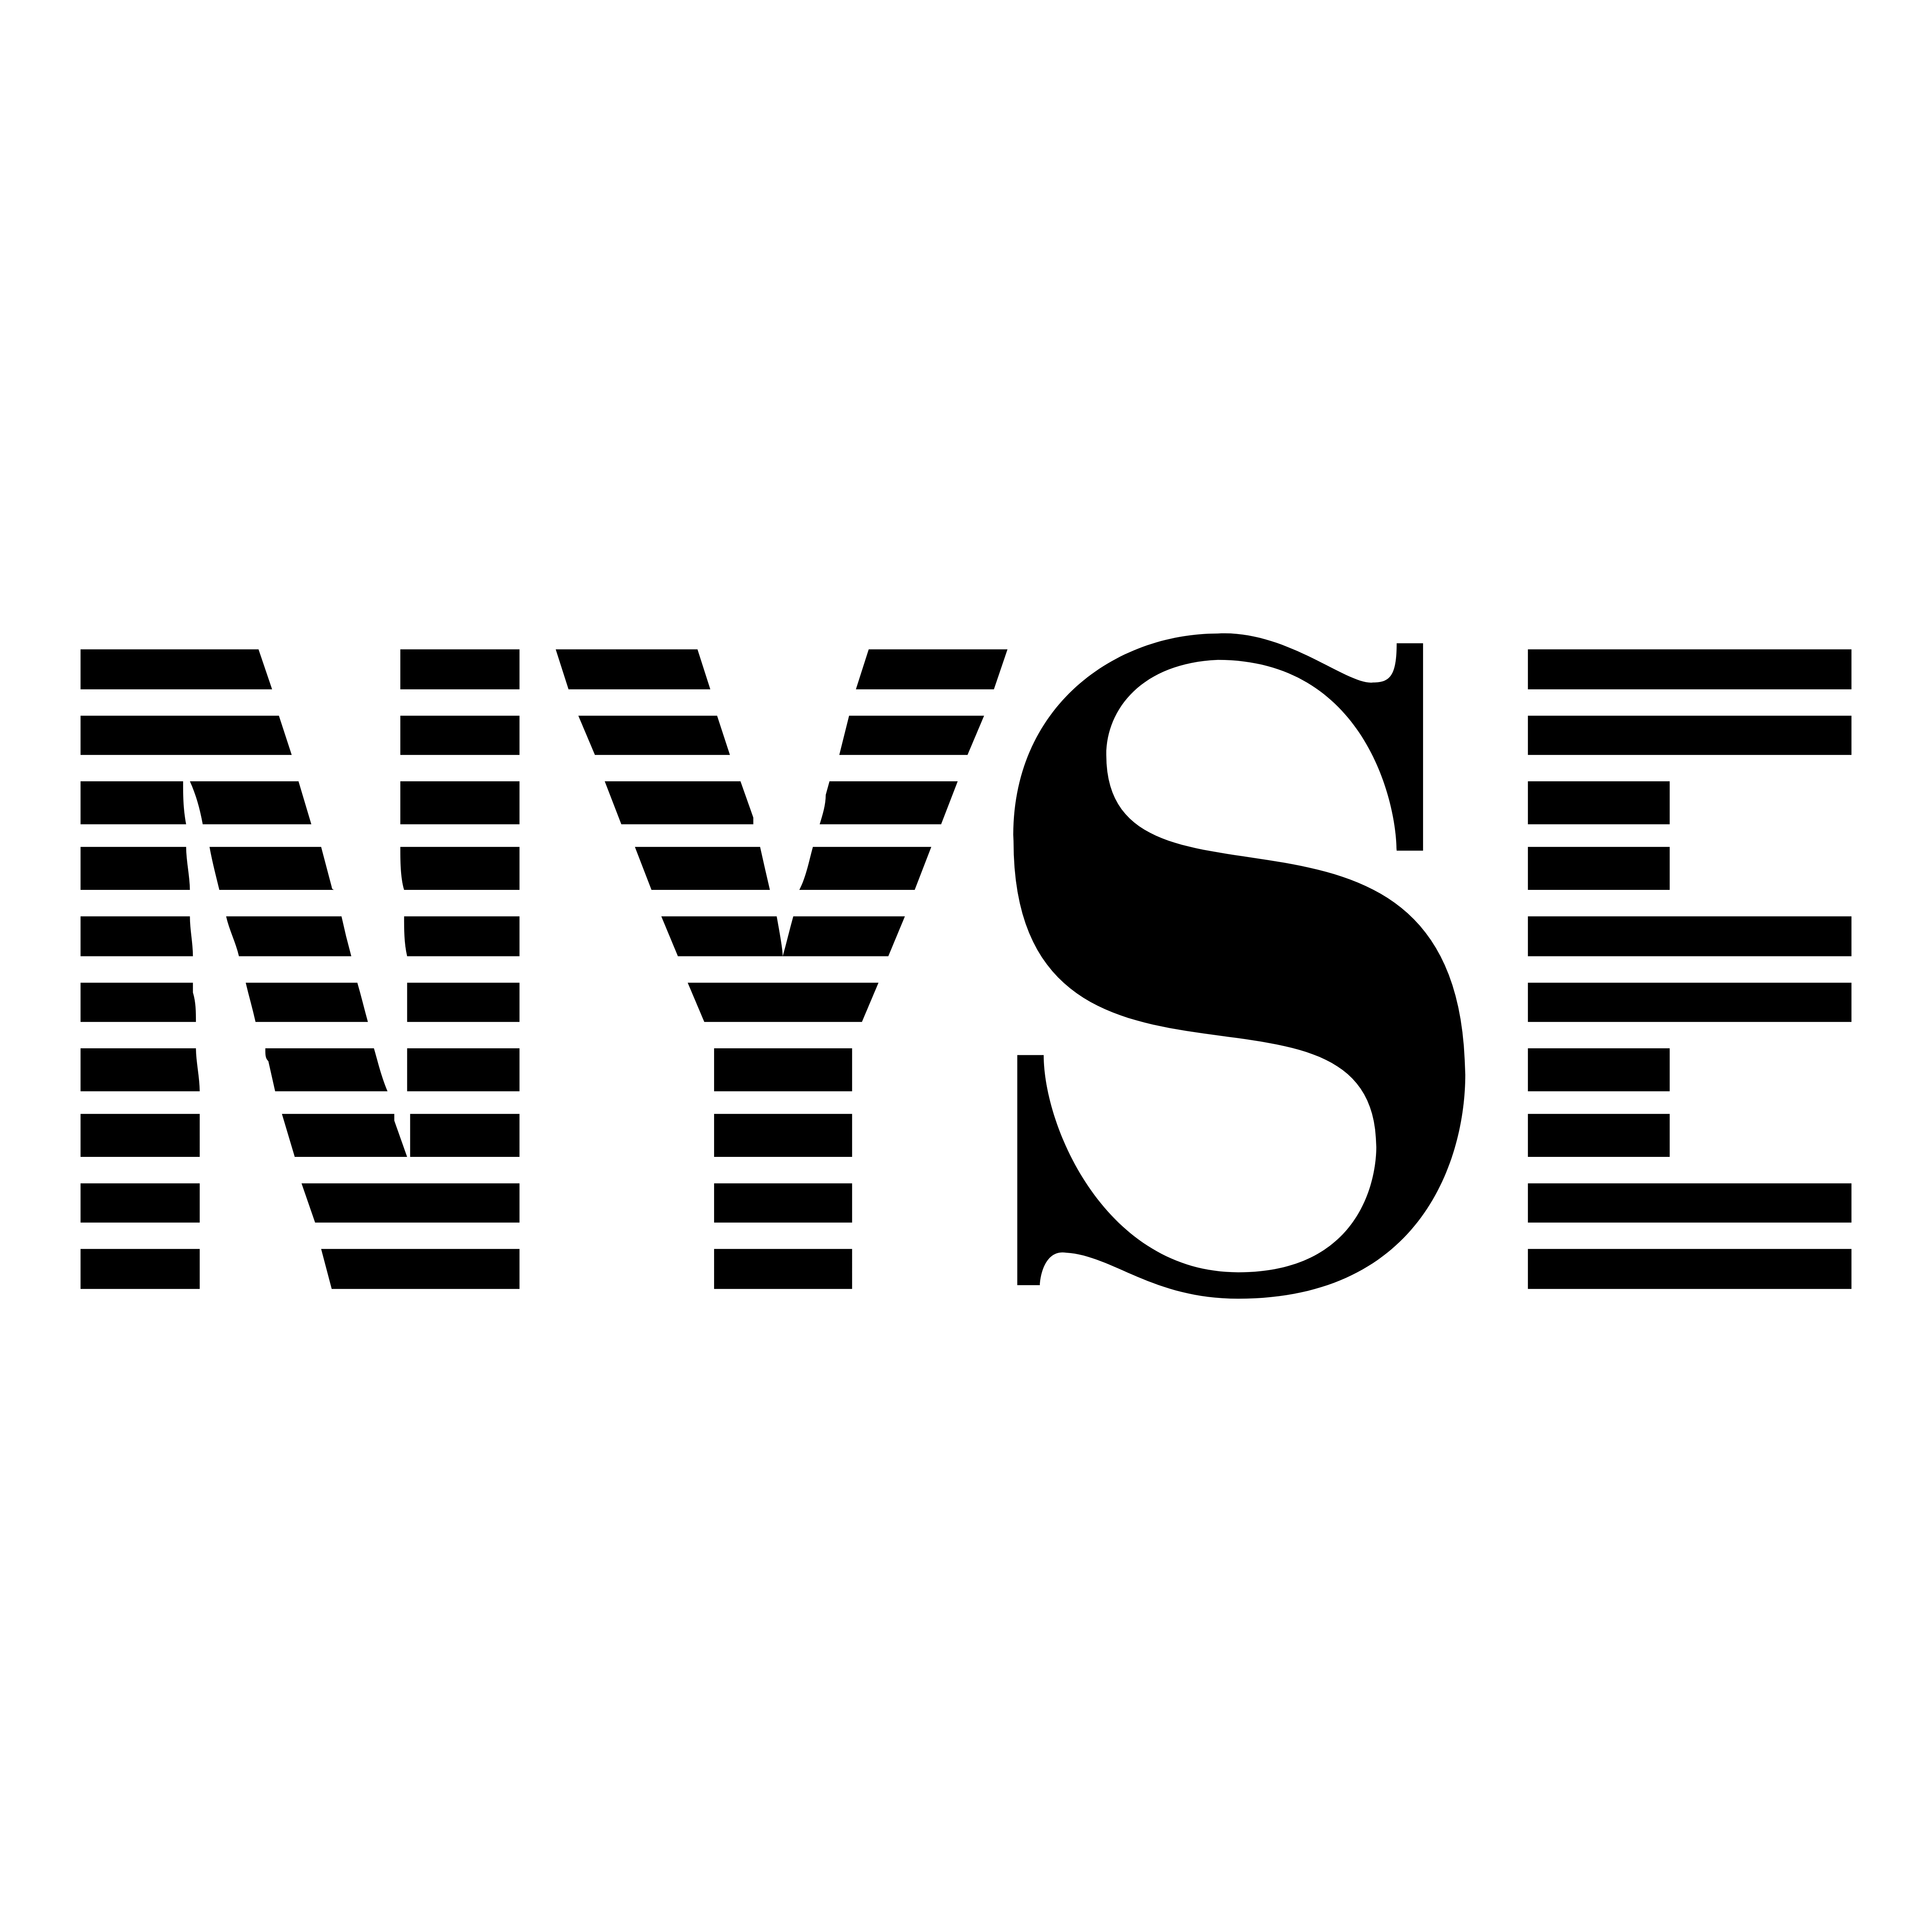 NYSE Logo - NYSE (New York Stock Exchange) – Logos Download